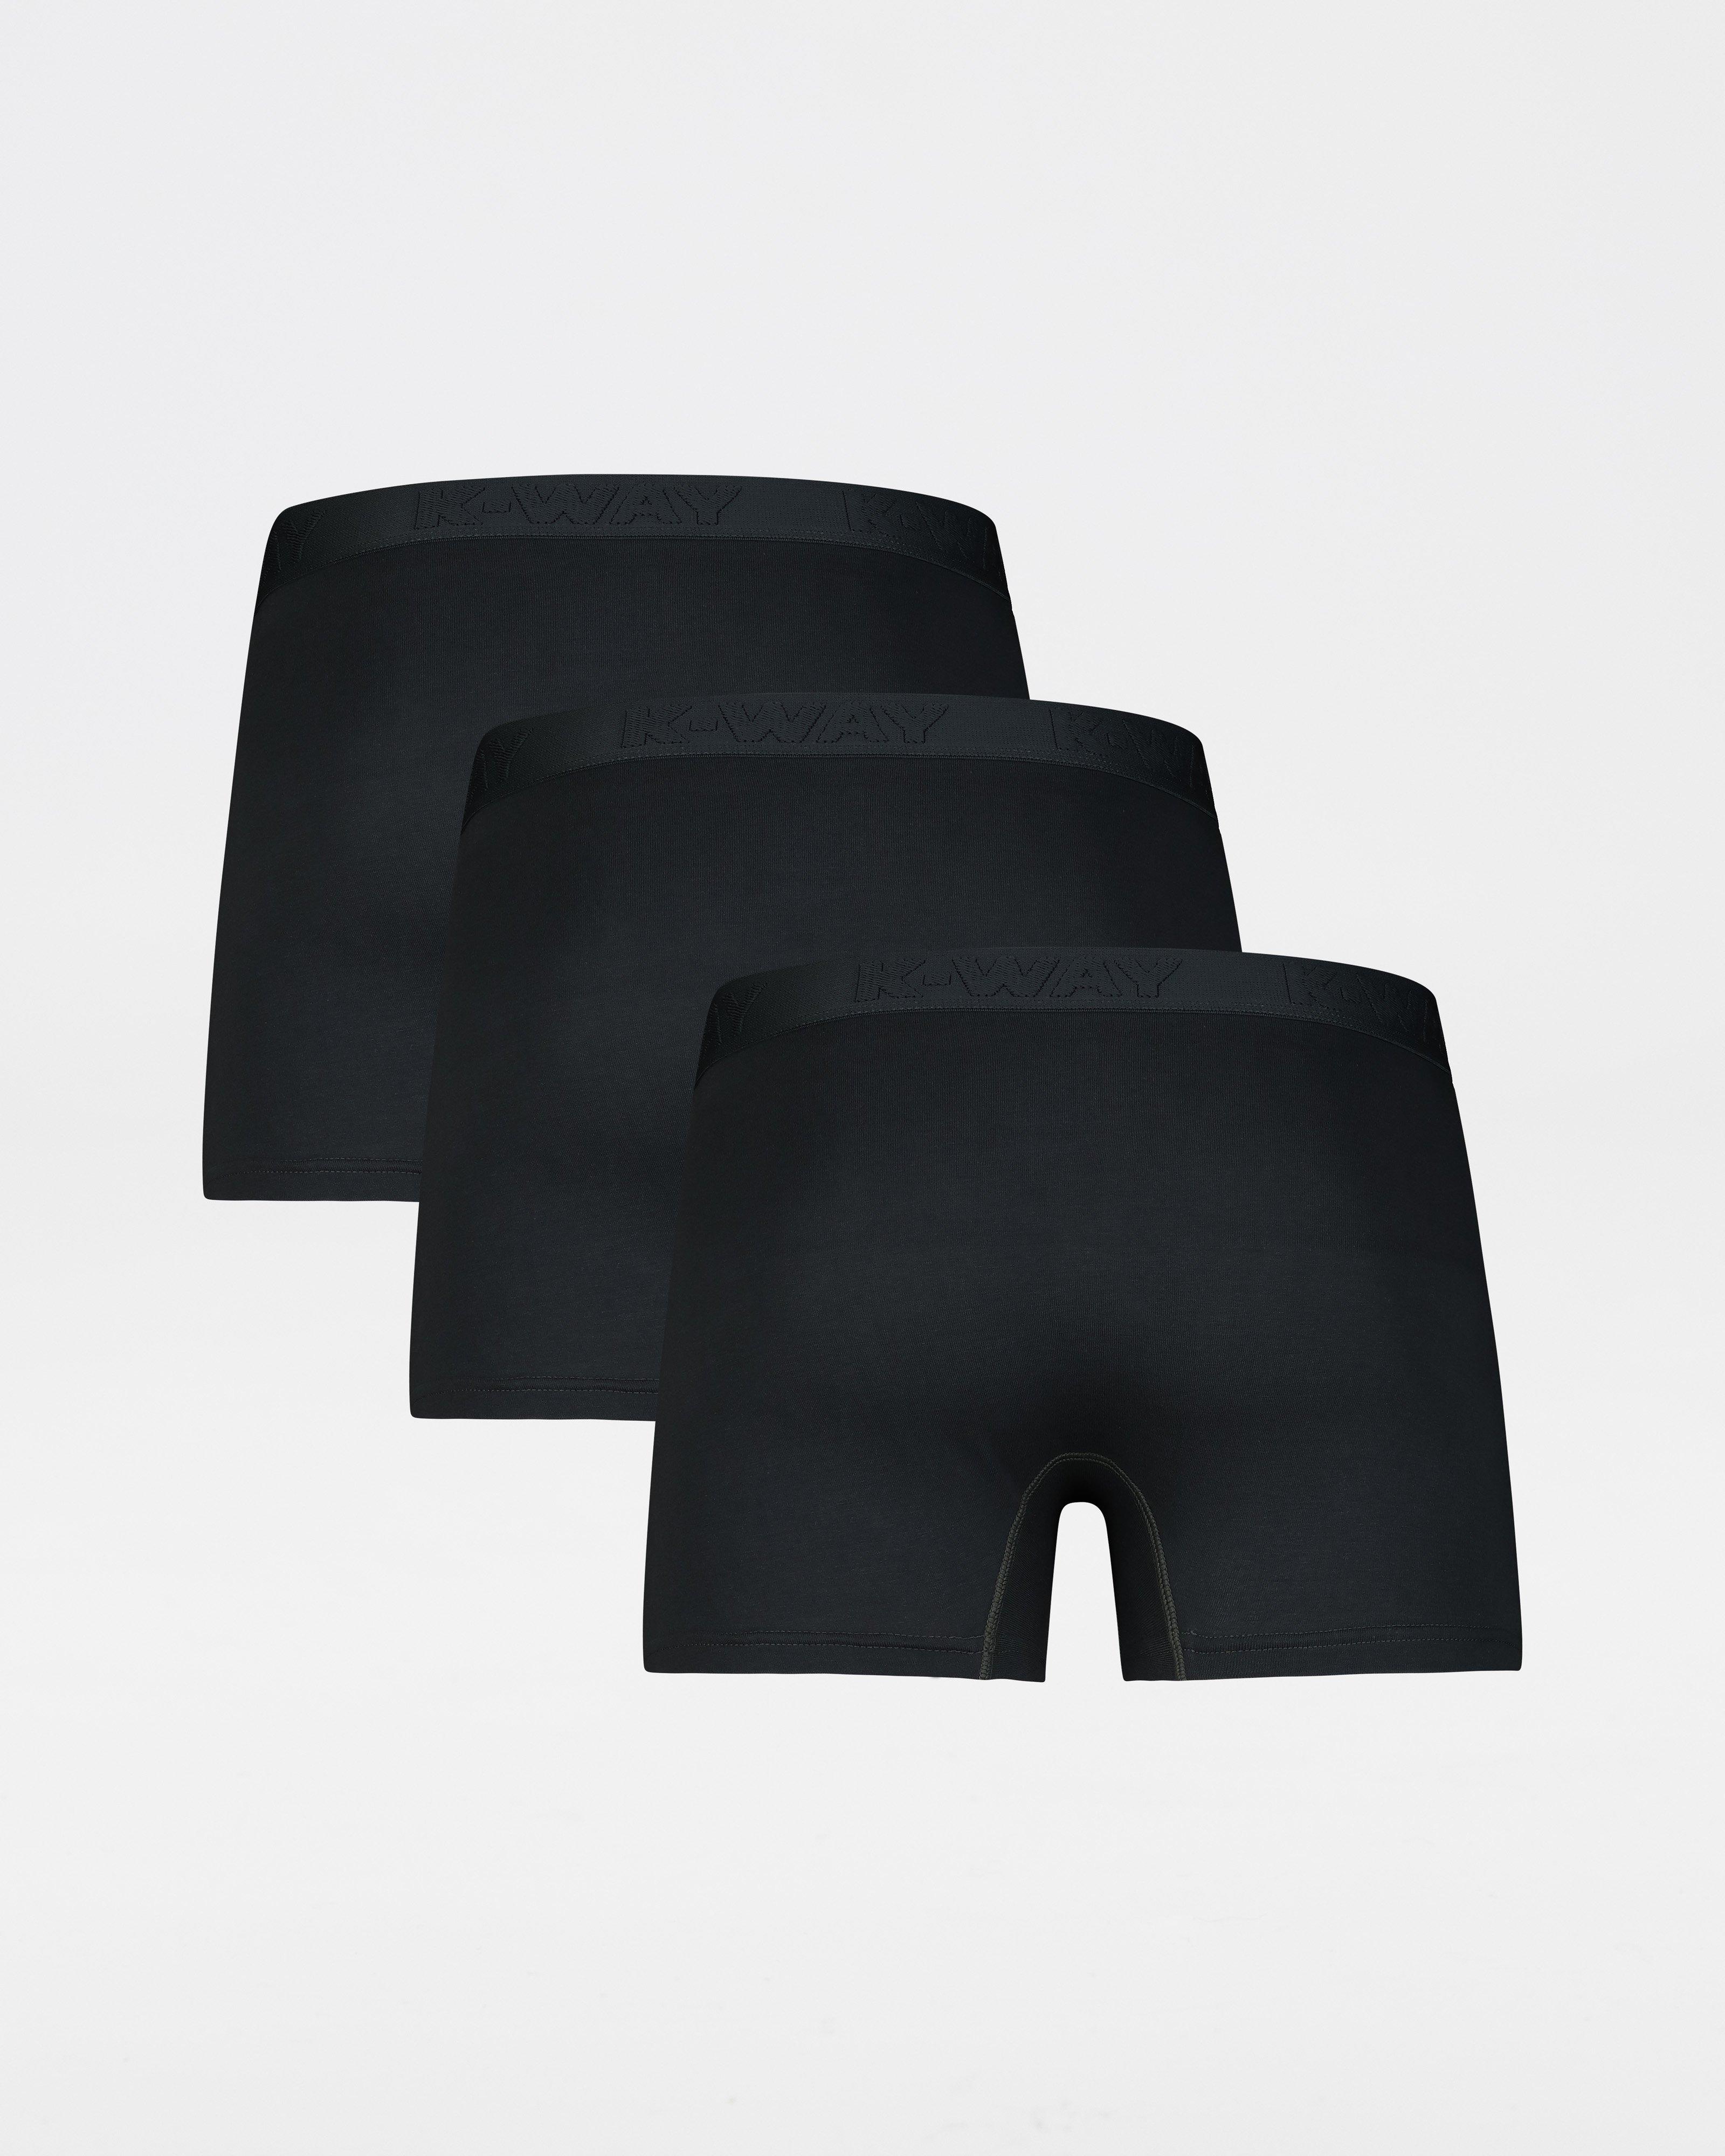 K-Way Elements Men’s Extended Size Cotton Stretch Trunks - 3 Pack -  Black